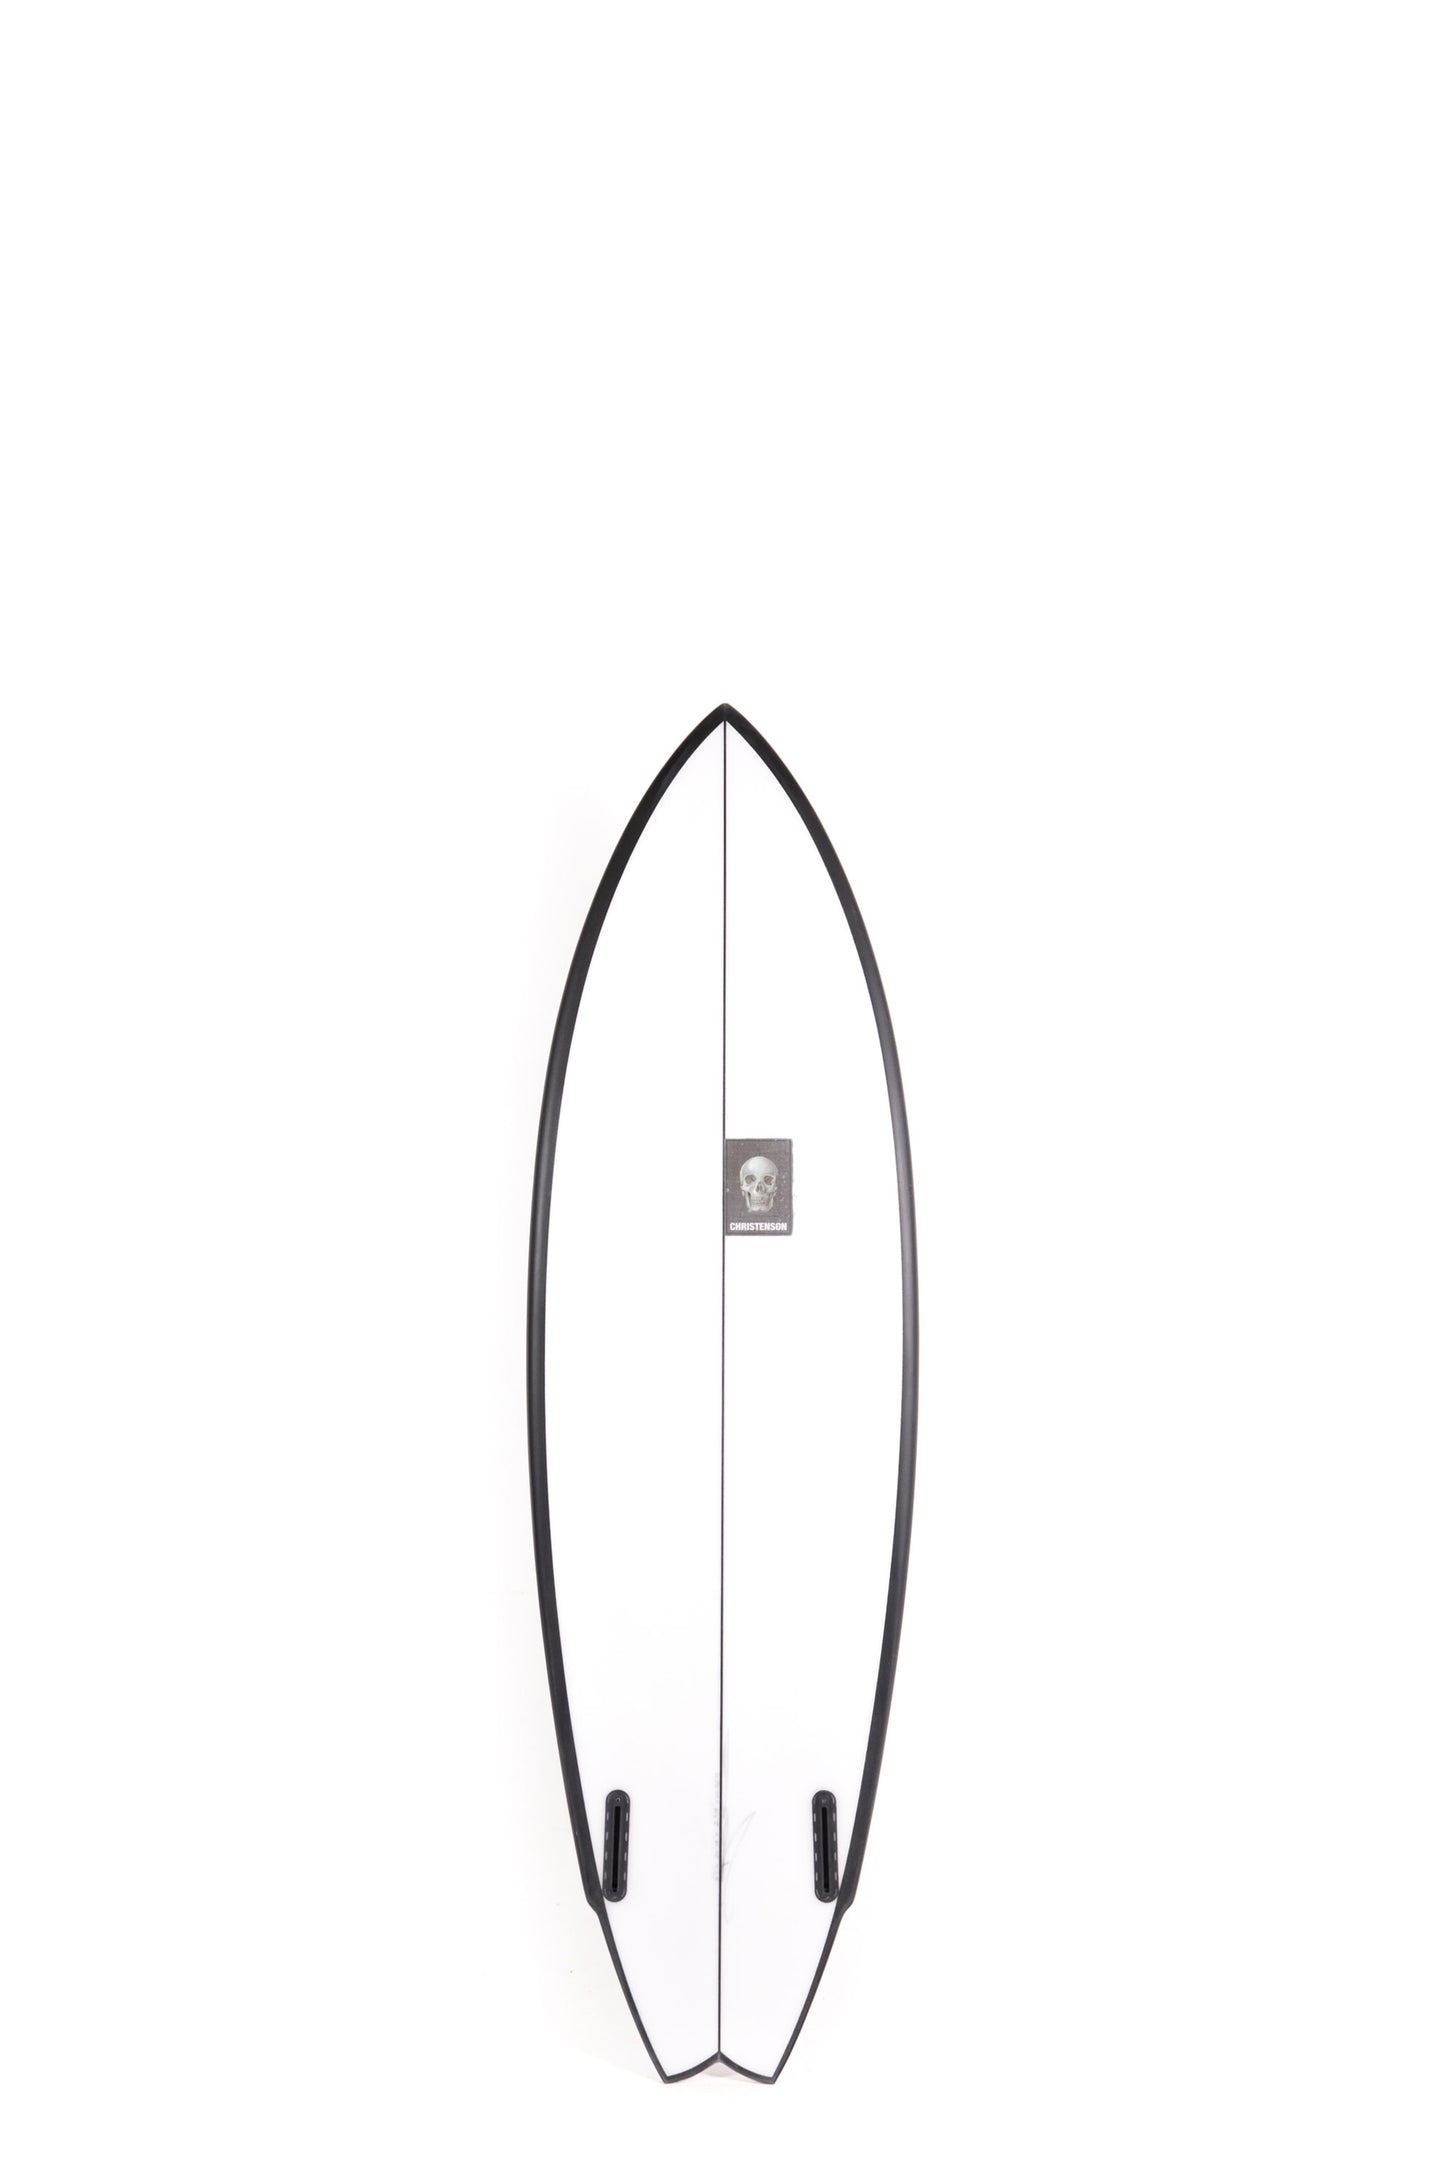 Pukas Surf Shop - Christenson Surfboards - LANE SPLITTER SWALLOW - 6'0" x 20 1/4 x 2 3/4 x 35,20L - CX05819